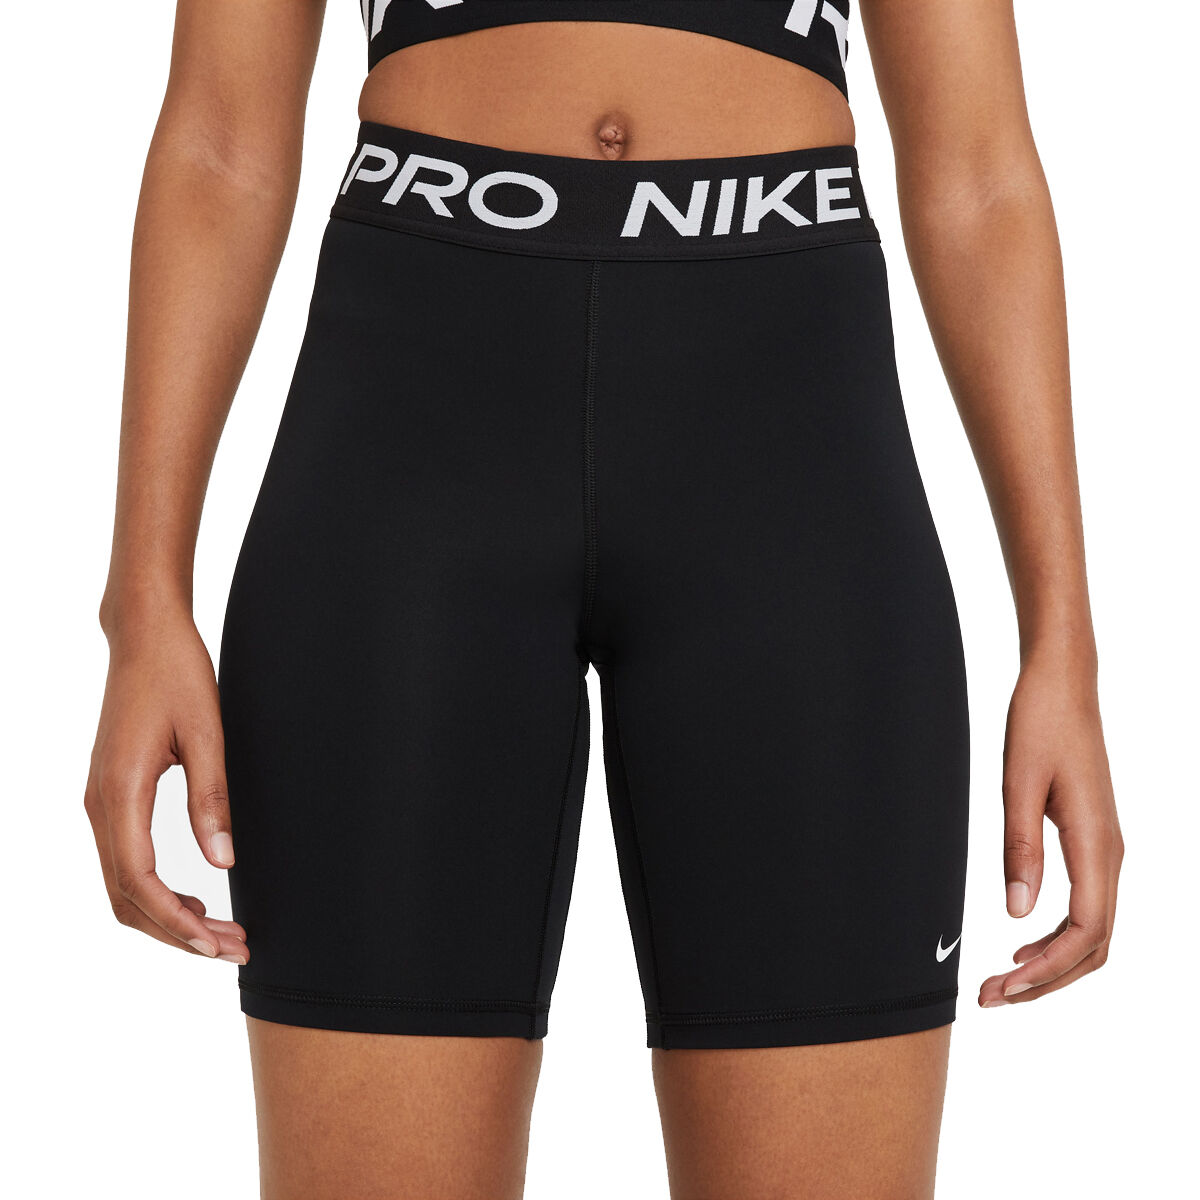 NIKE PRO SHORTS Women's Compression Shorts Spandex 2.0 3.0 NEW